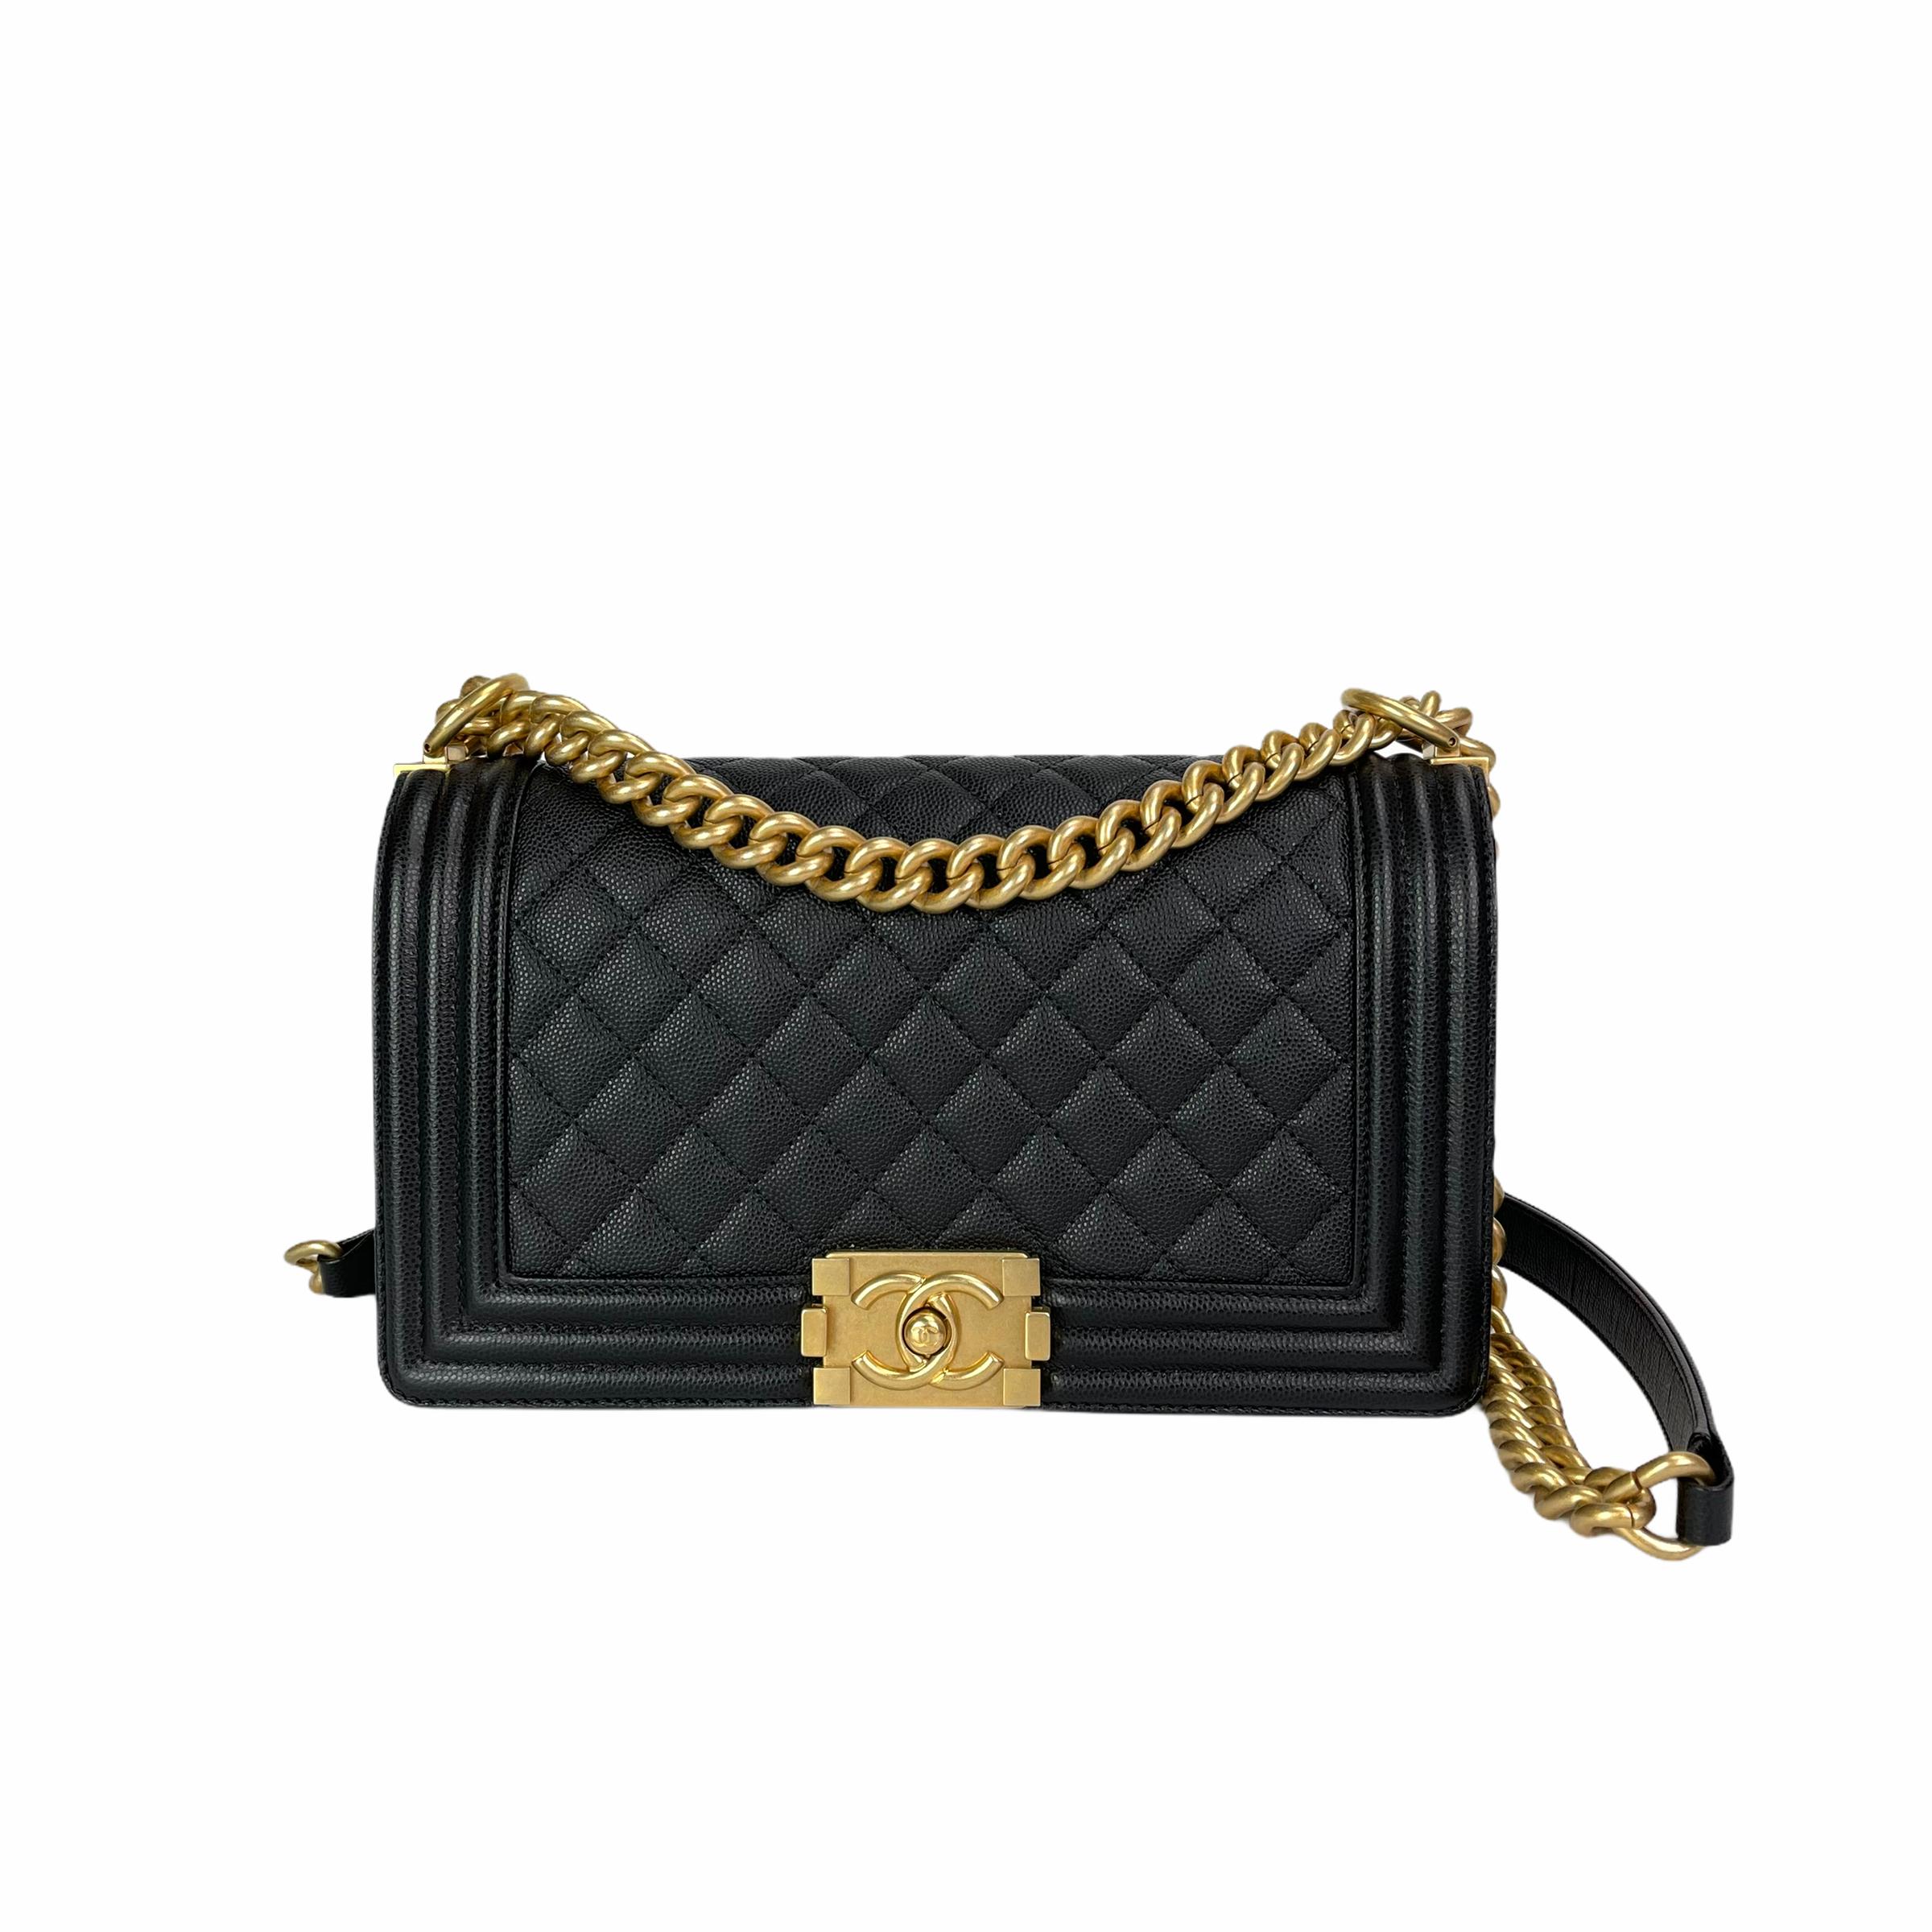 Chanel 19 Flap Bag Lambskin GoldRutheniumtone Large Black in Lambskin  with GoldRutheniumtone  US